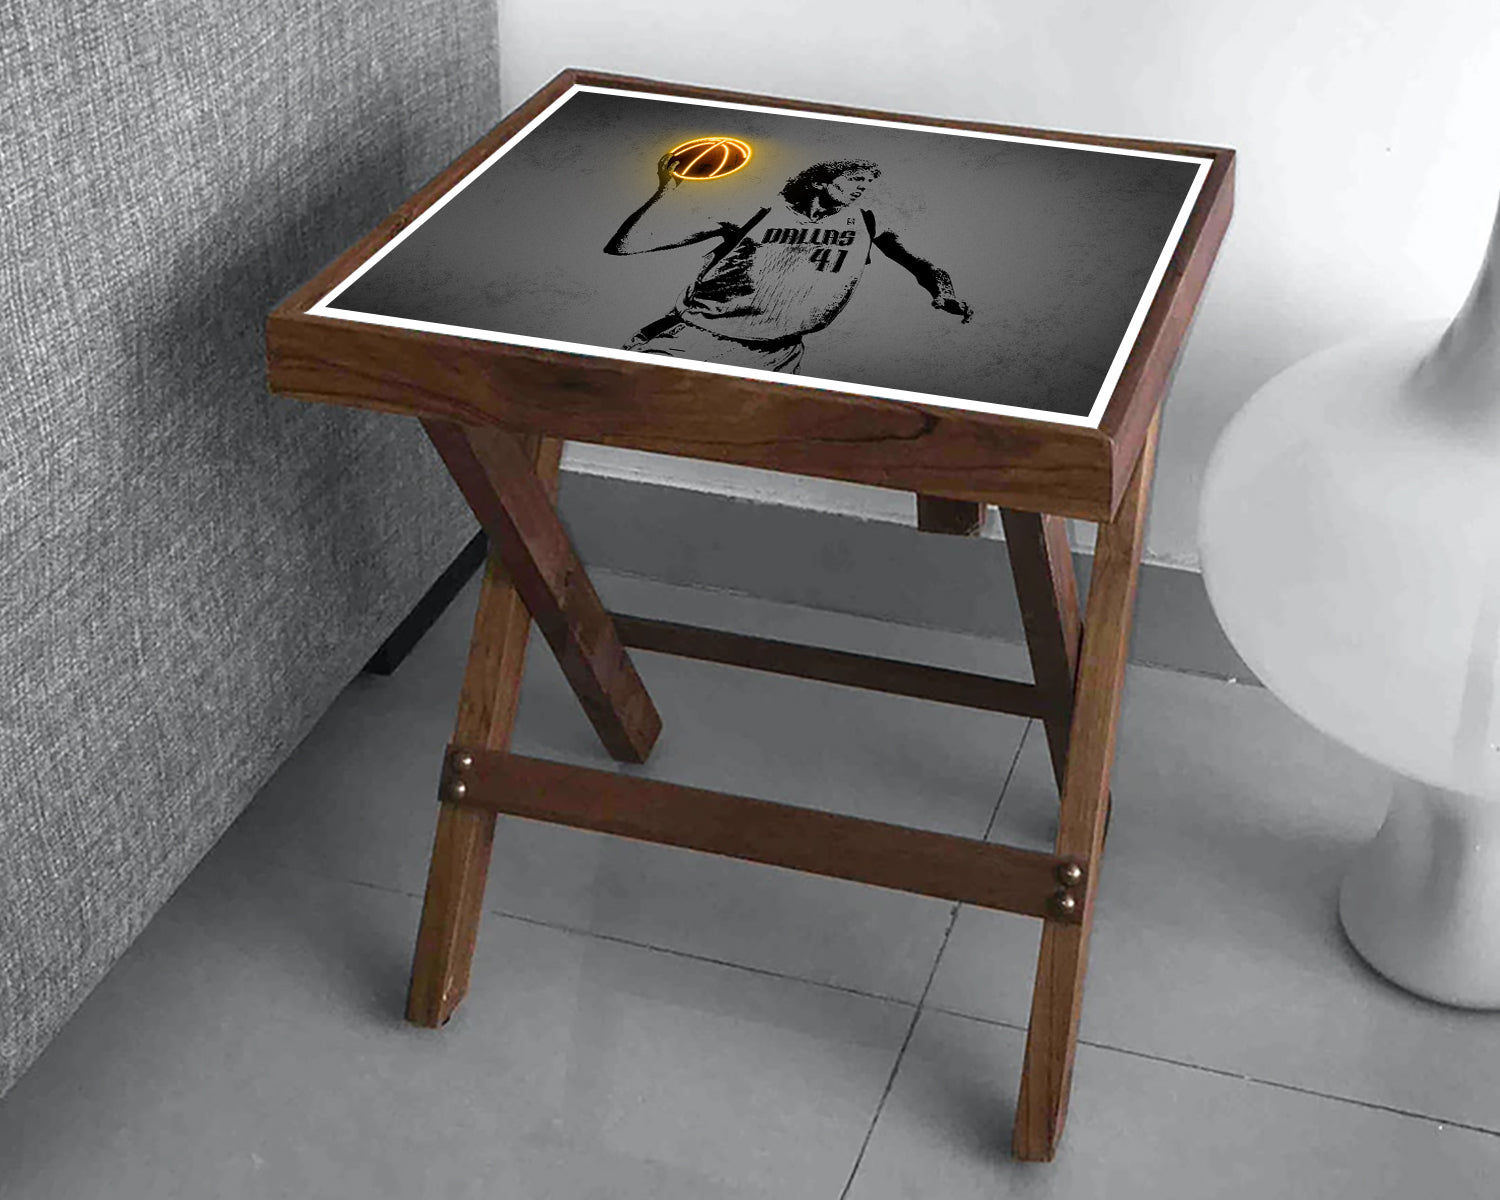 Dirk Nowitzki Neon Effect Coffee and Laptop Table 